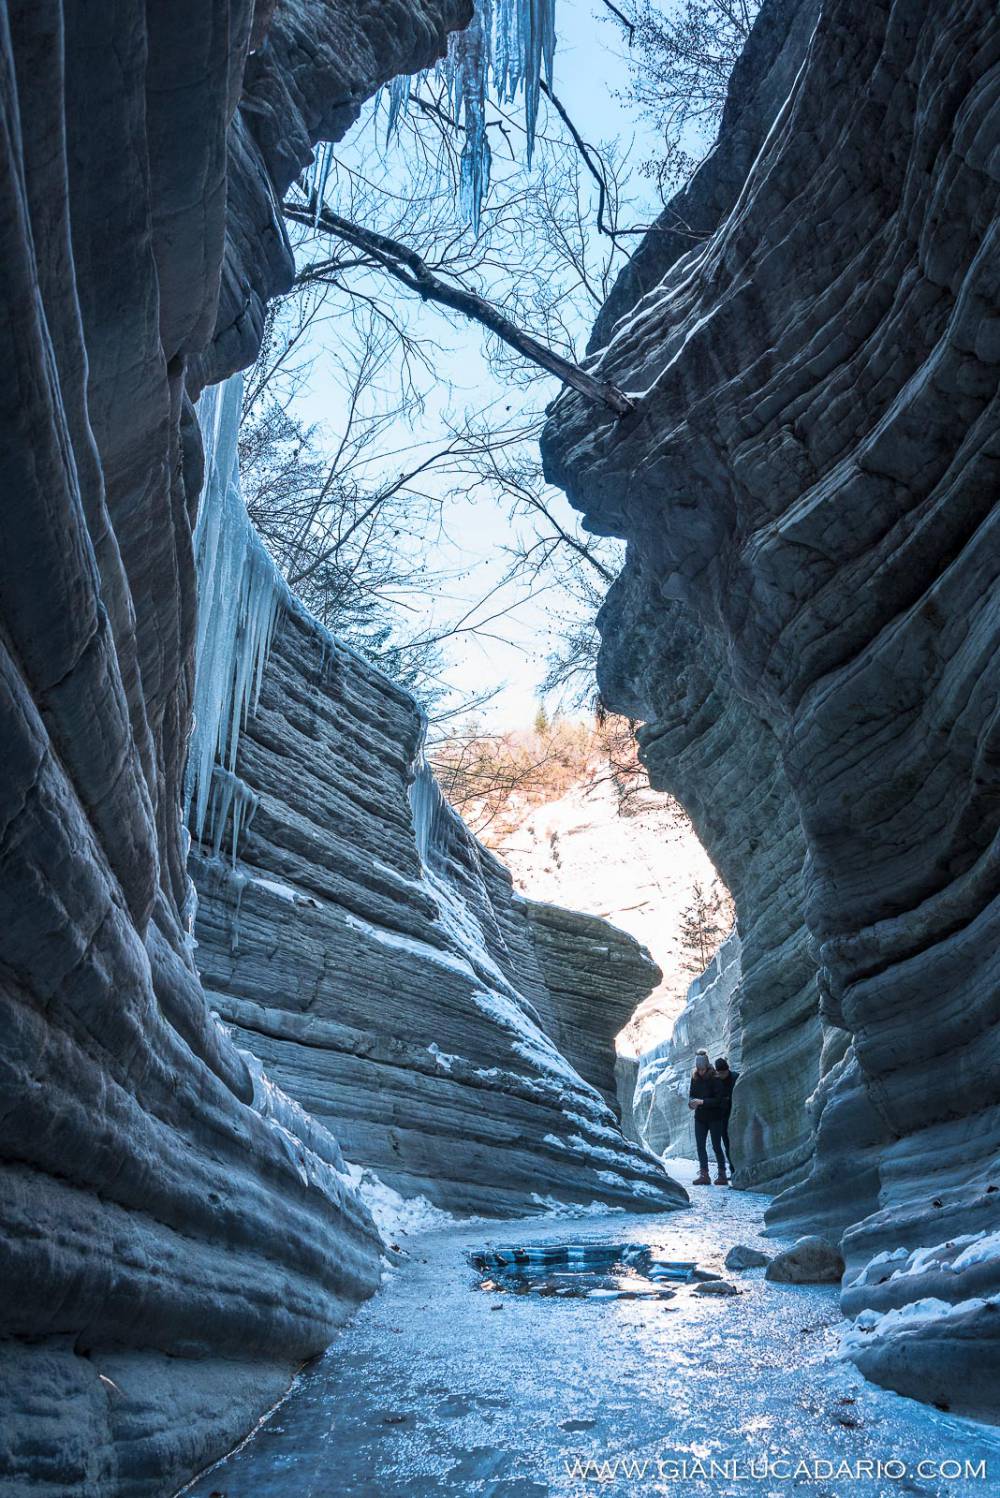 Brent del Art, il canyon nel Bellunese - foto 14 - Gianluca Dario Photography